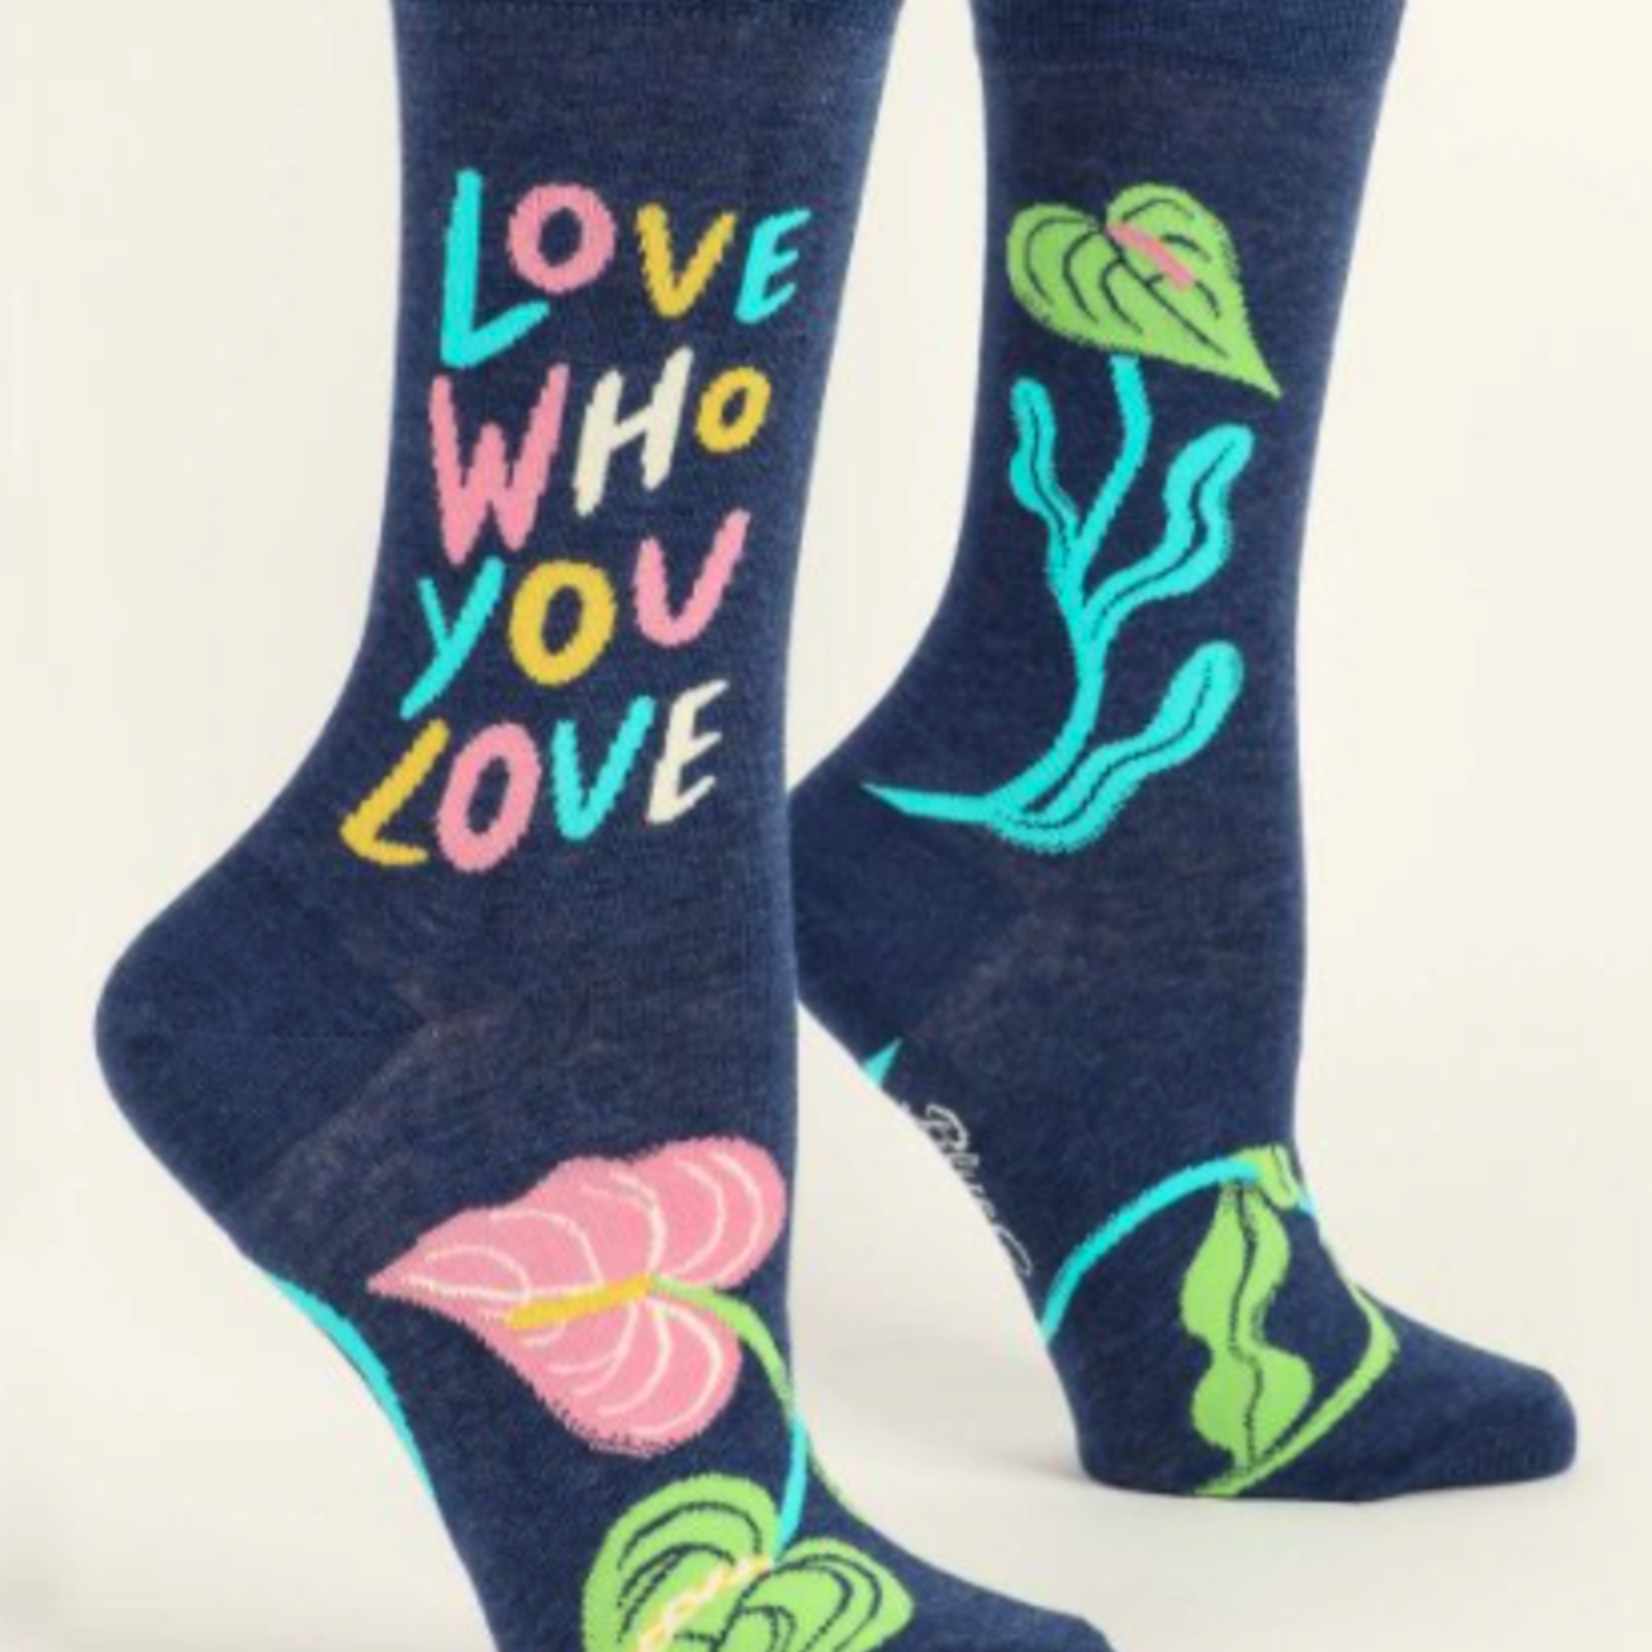 Blue Q Blue Q - Crew Socks Love Who You Love